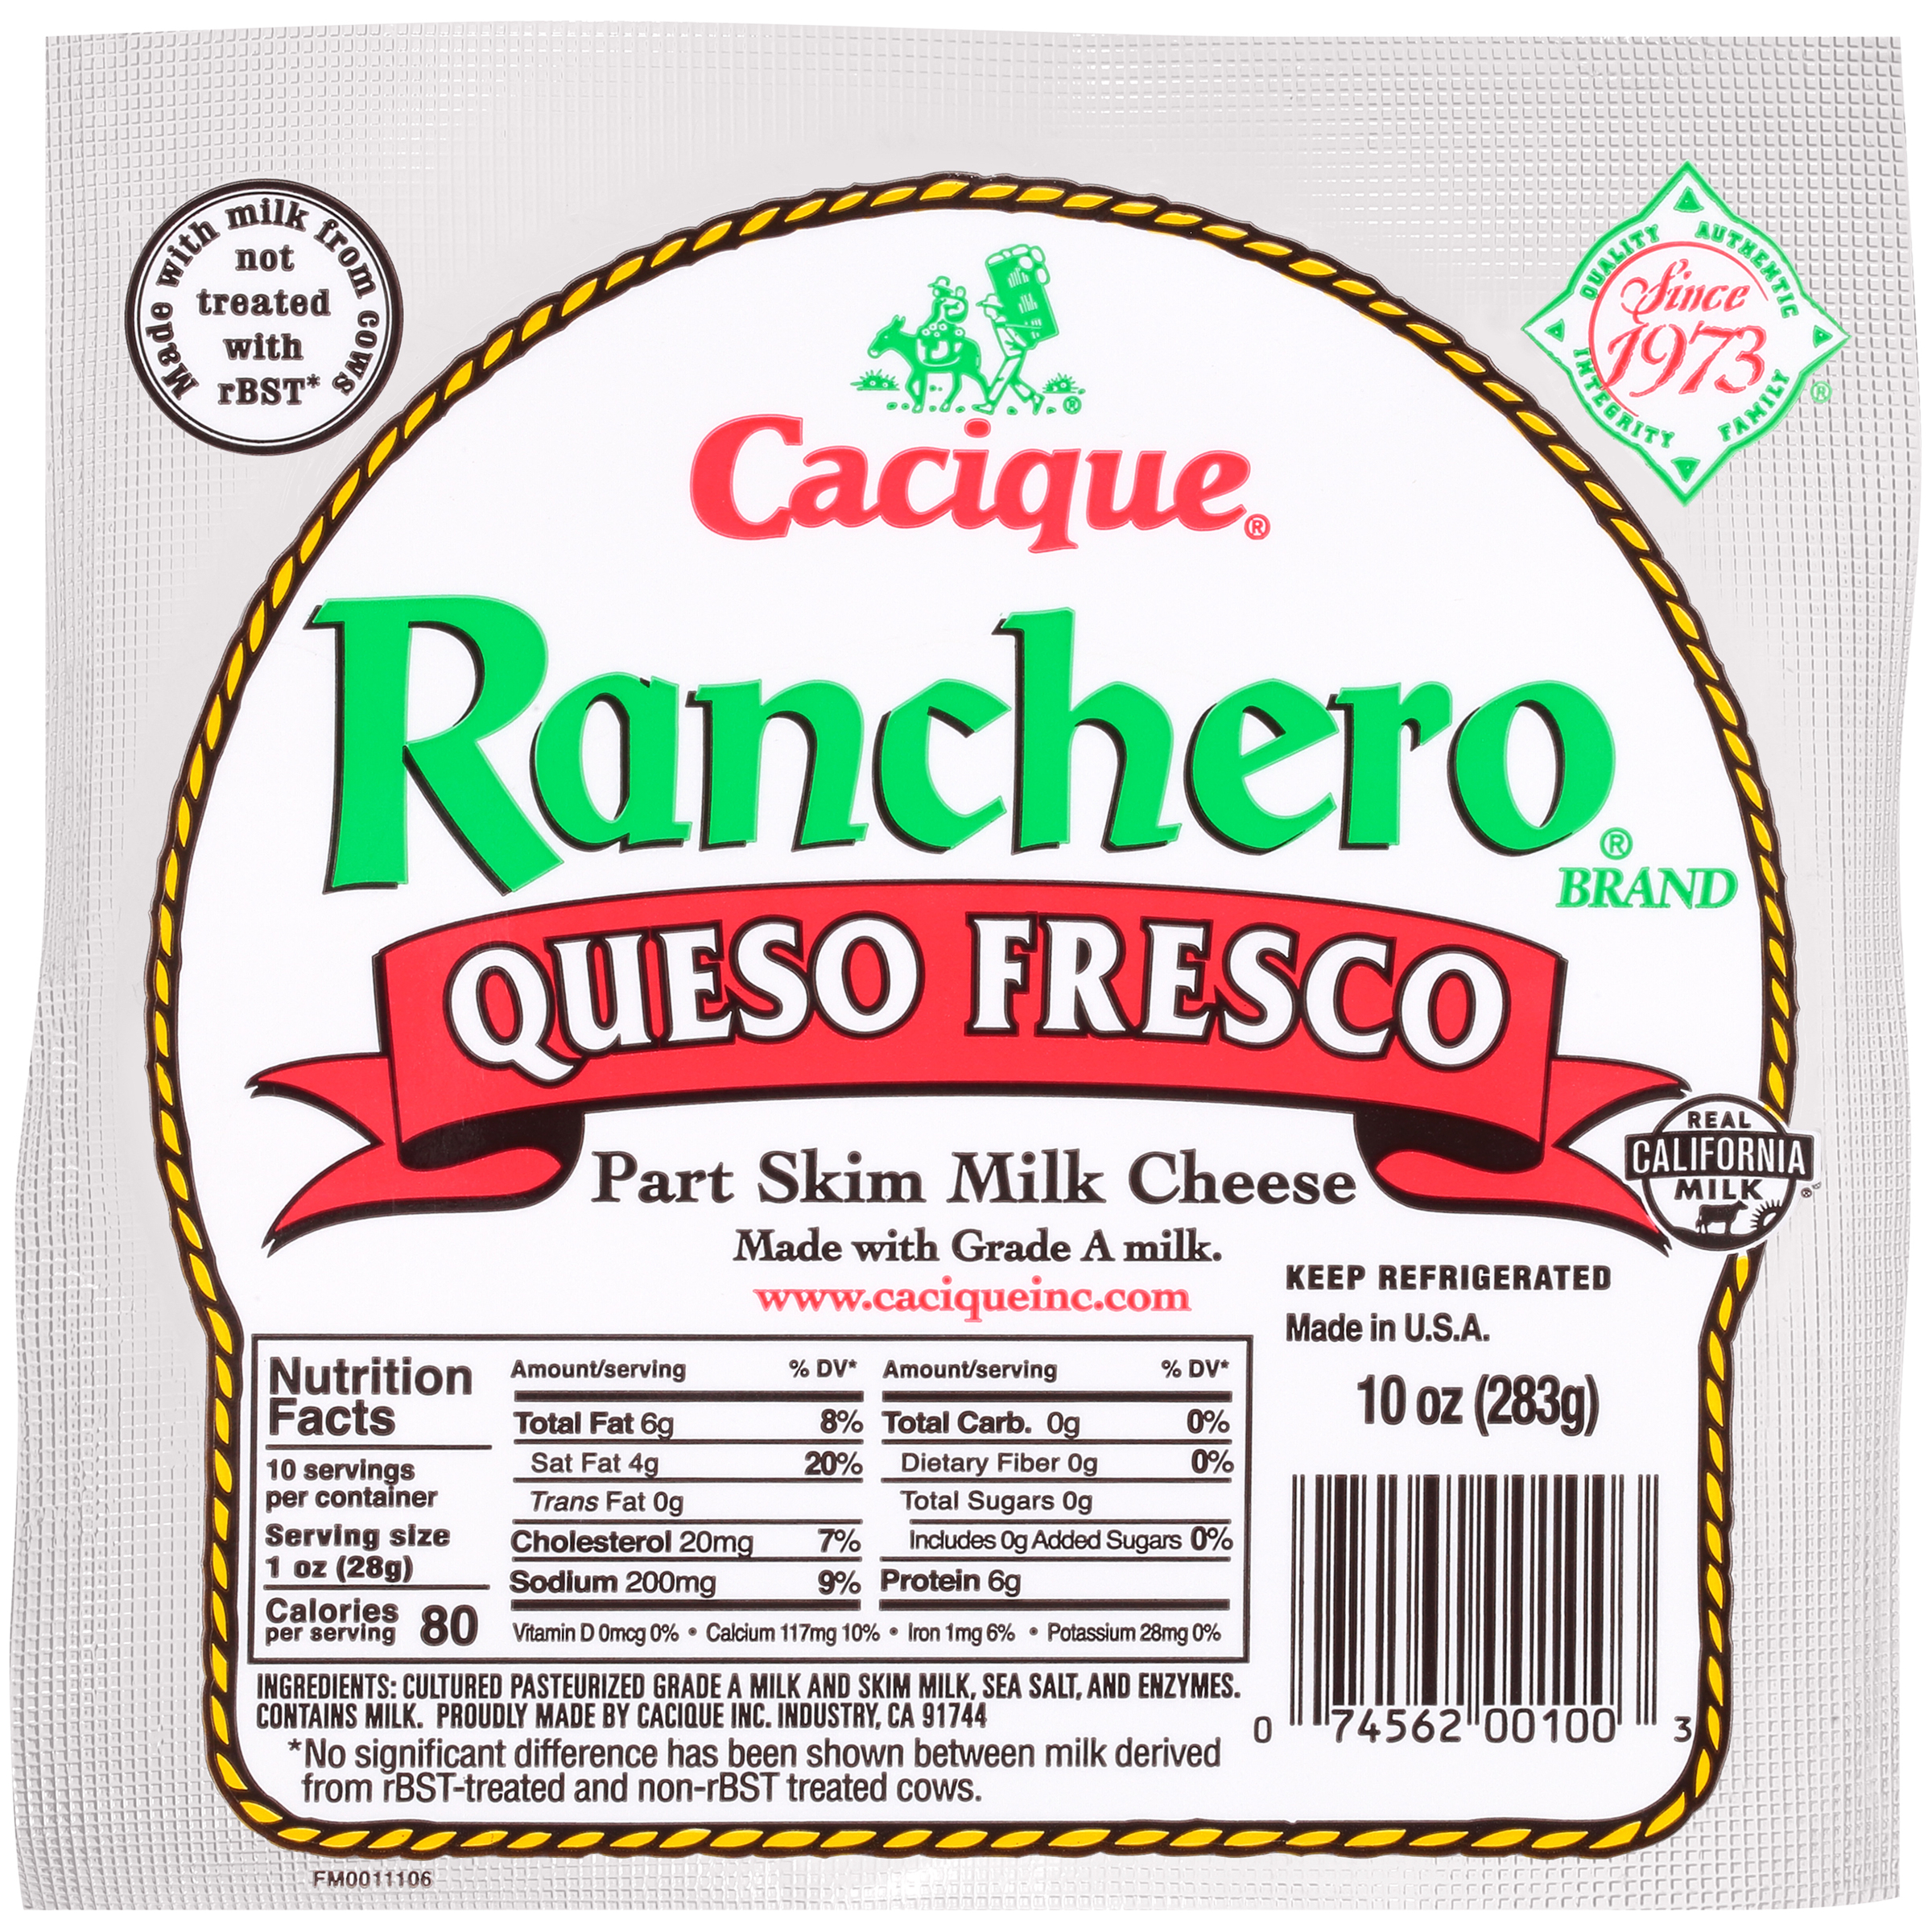 Cacique Ranchero Fresh Queso Fresco Cheese, 10 oz (Refrigerated) - image 1 of 9